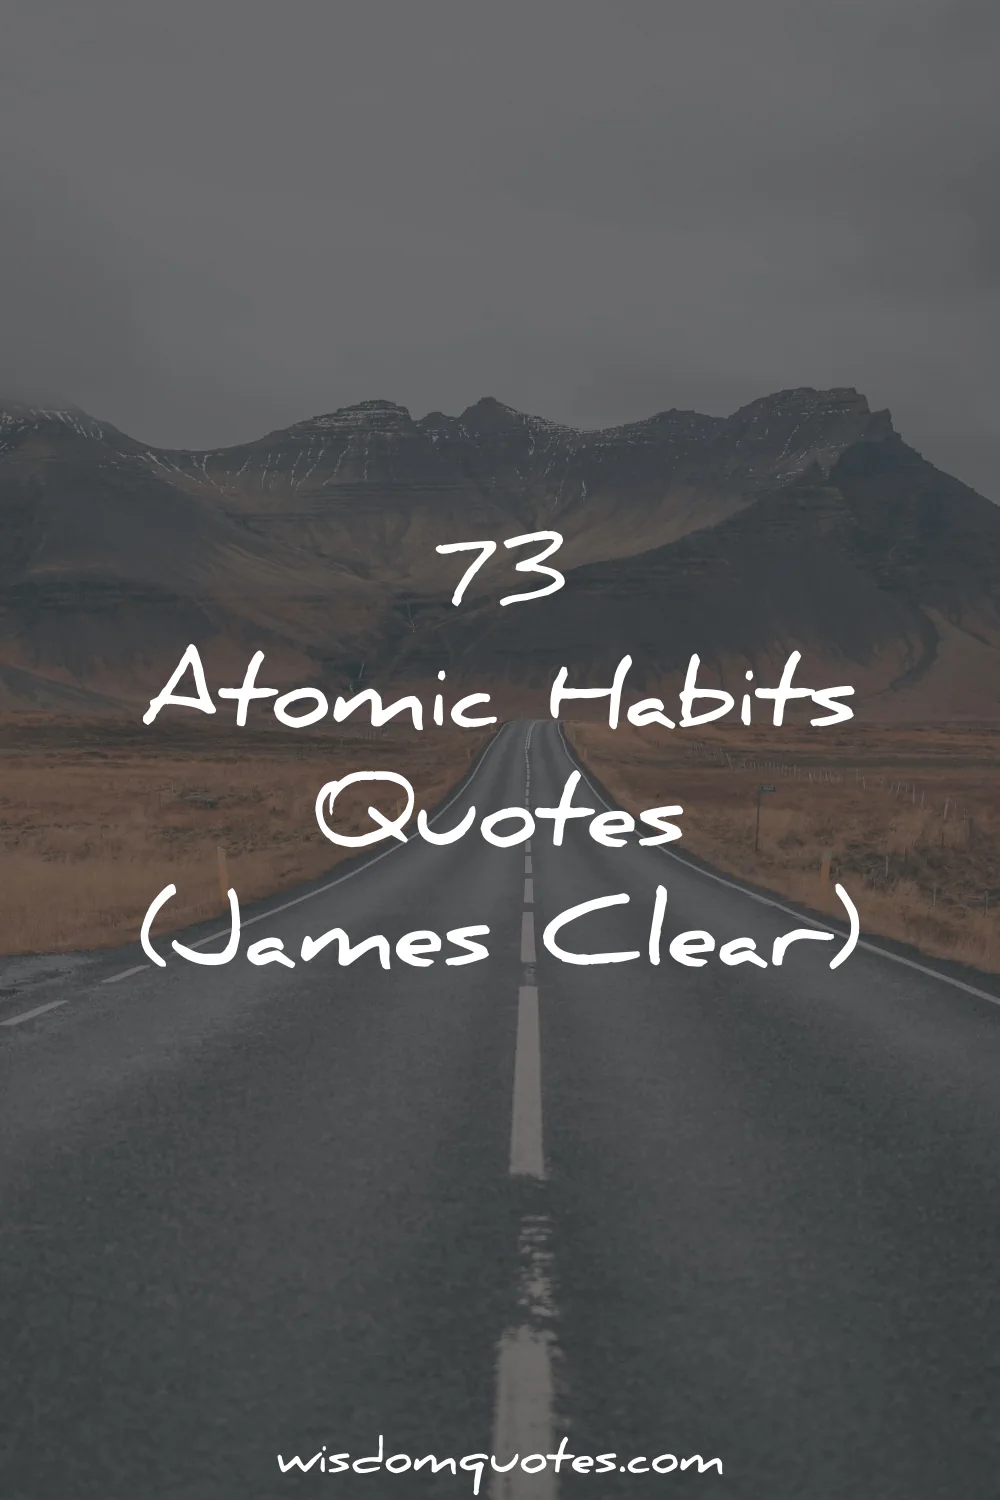 atomic habits quotes james clear pinterest wisdom